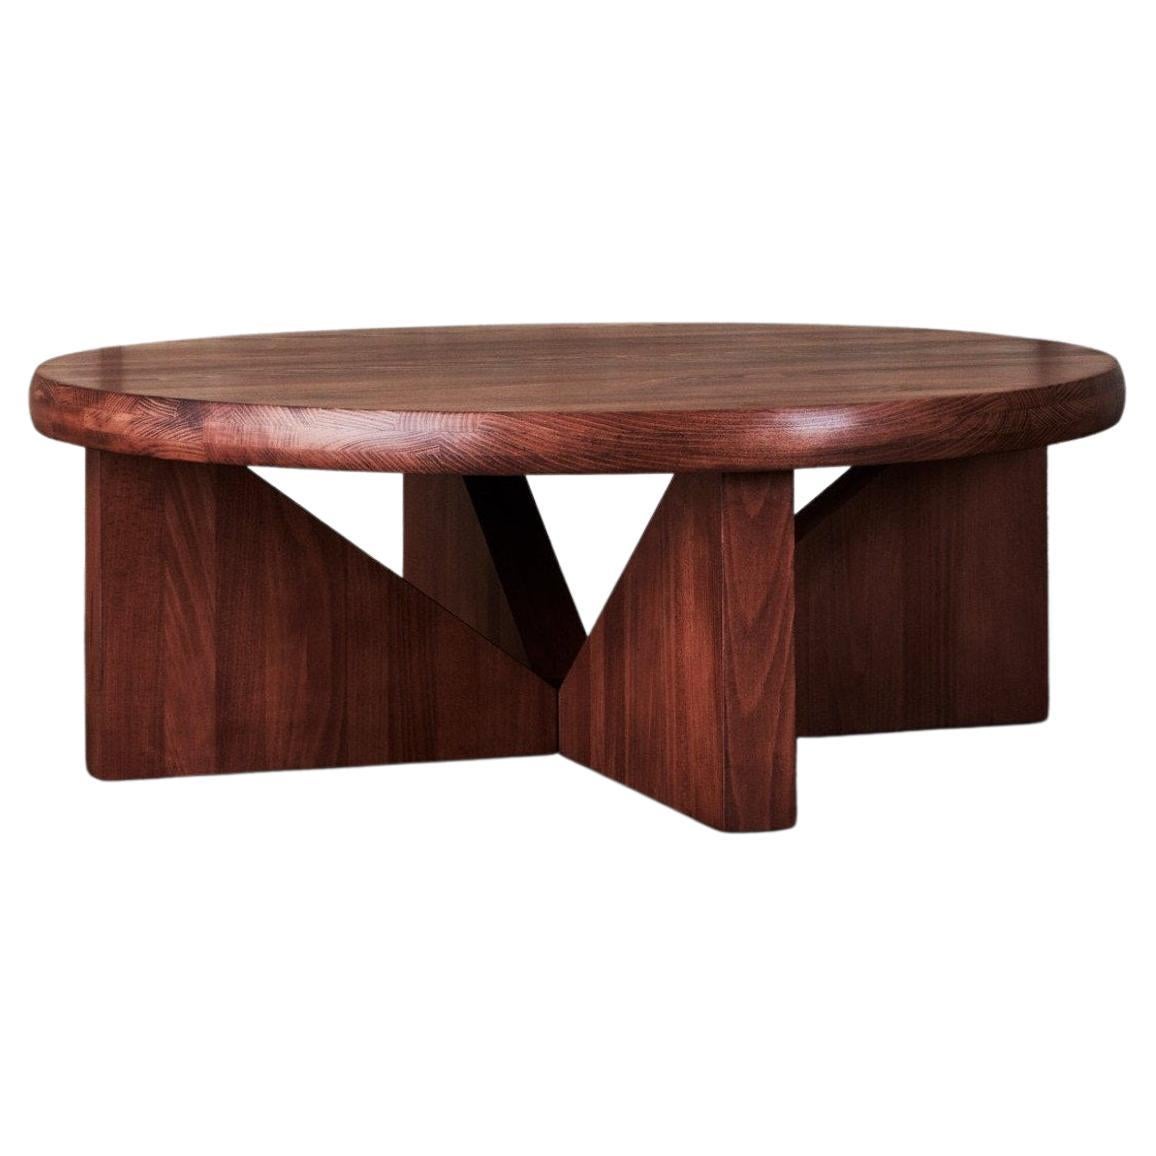 21st Century Modern Scandinavian Beech wood Round Coffee Table "V" by Dusty Deco